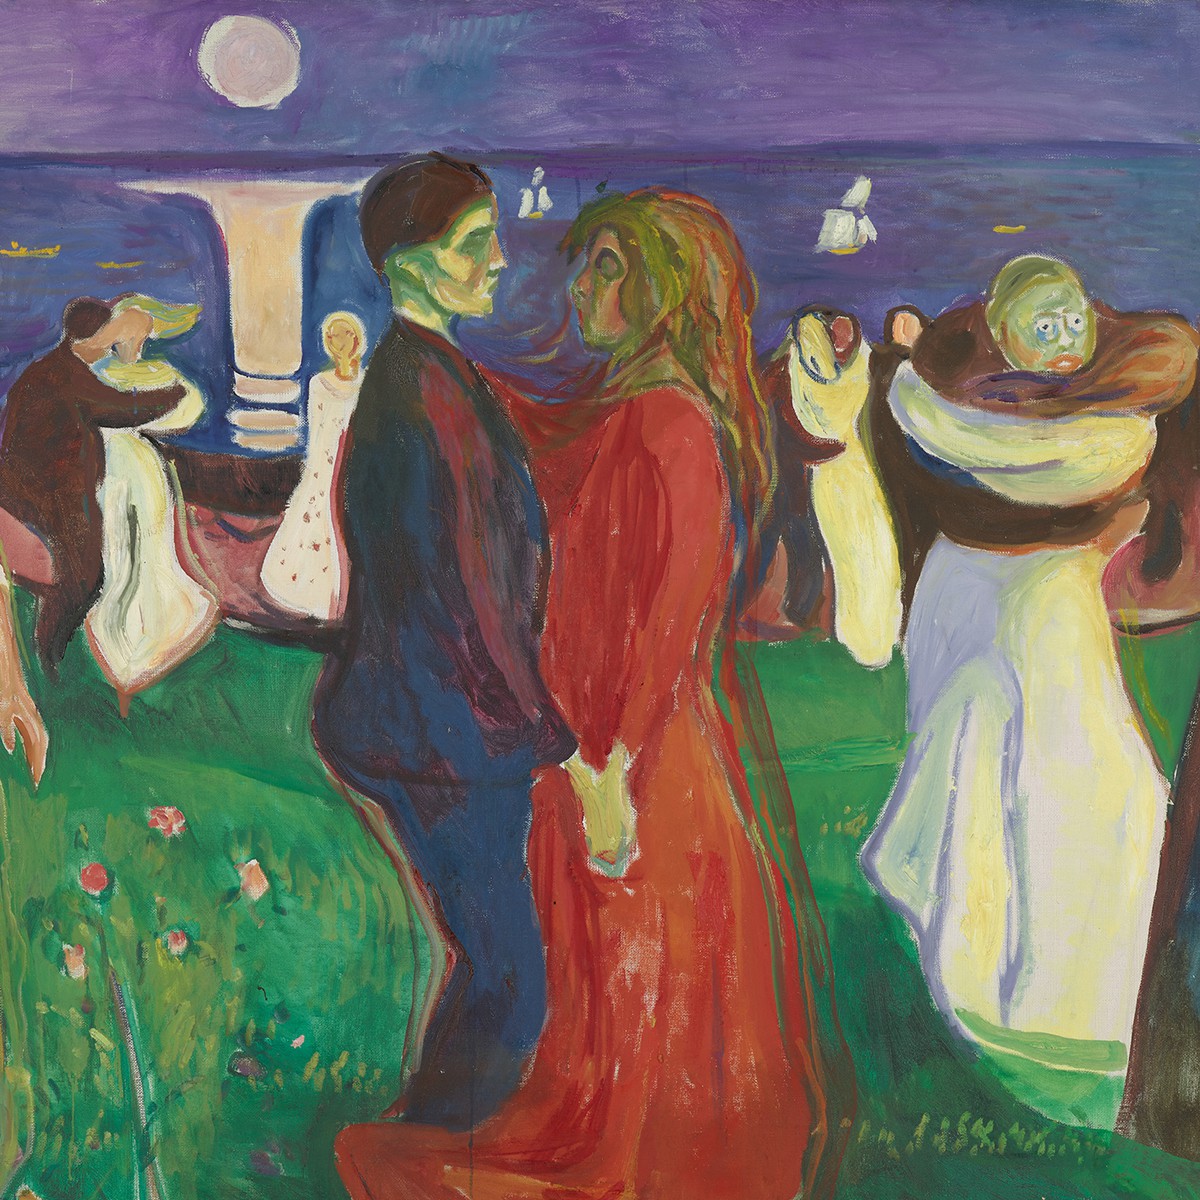 Живете картина. «Танец жизни», Эдвард Мунк, (1899-1900). Мунк танец жизни. Эдвард Мунк танец. Картина танец жизни Эдварда Мунка.